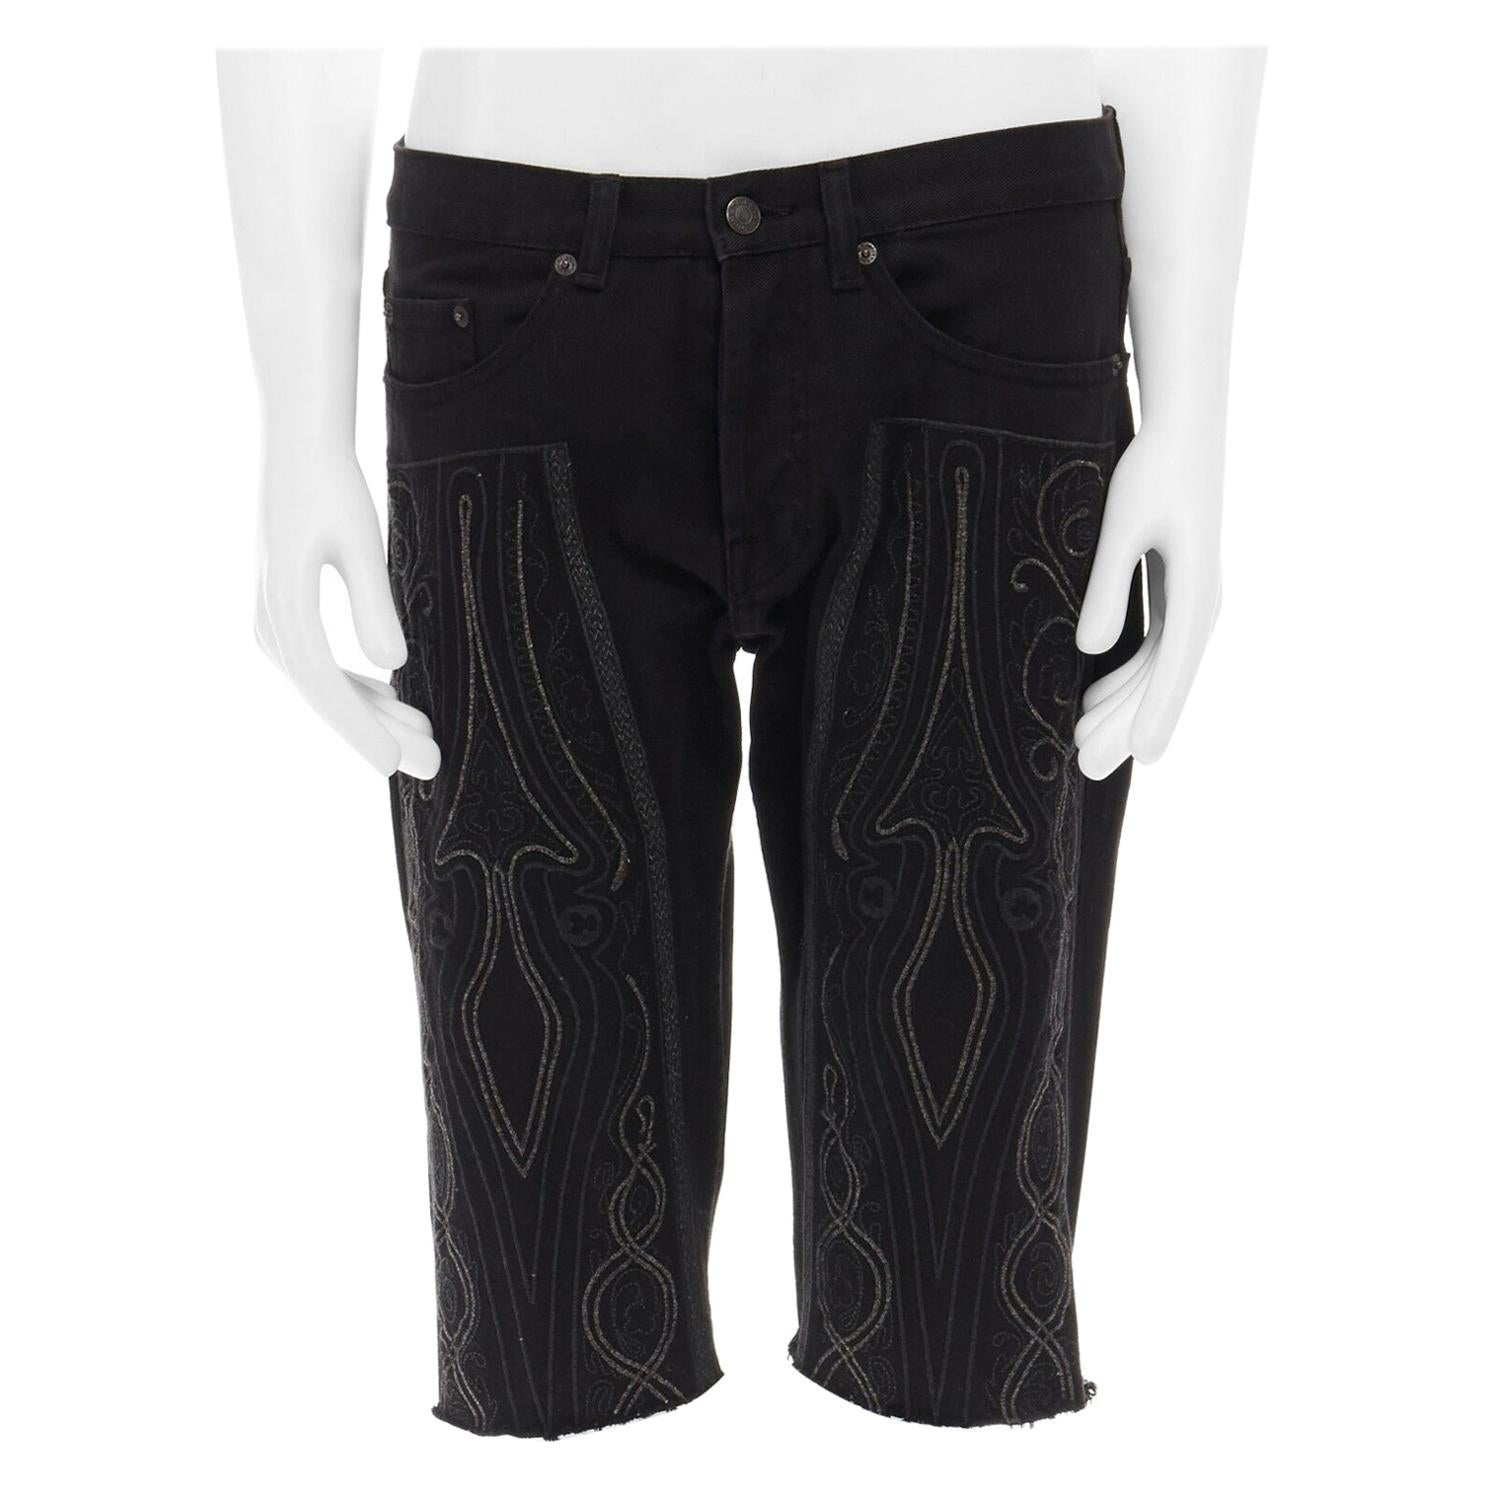 DRIES VAN NOTEN SS15 black baroque embroidered cut off jeans denim shorts M 32"